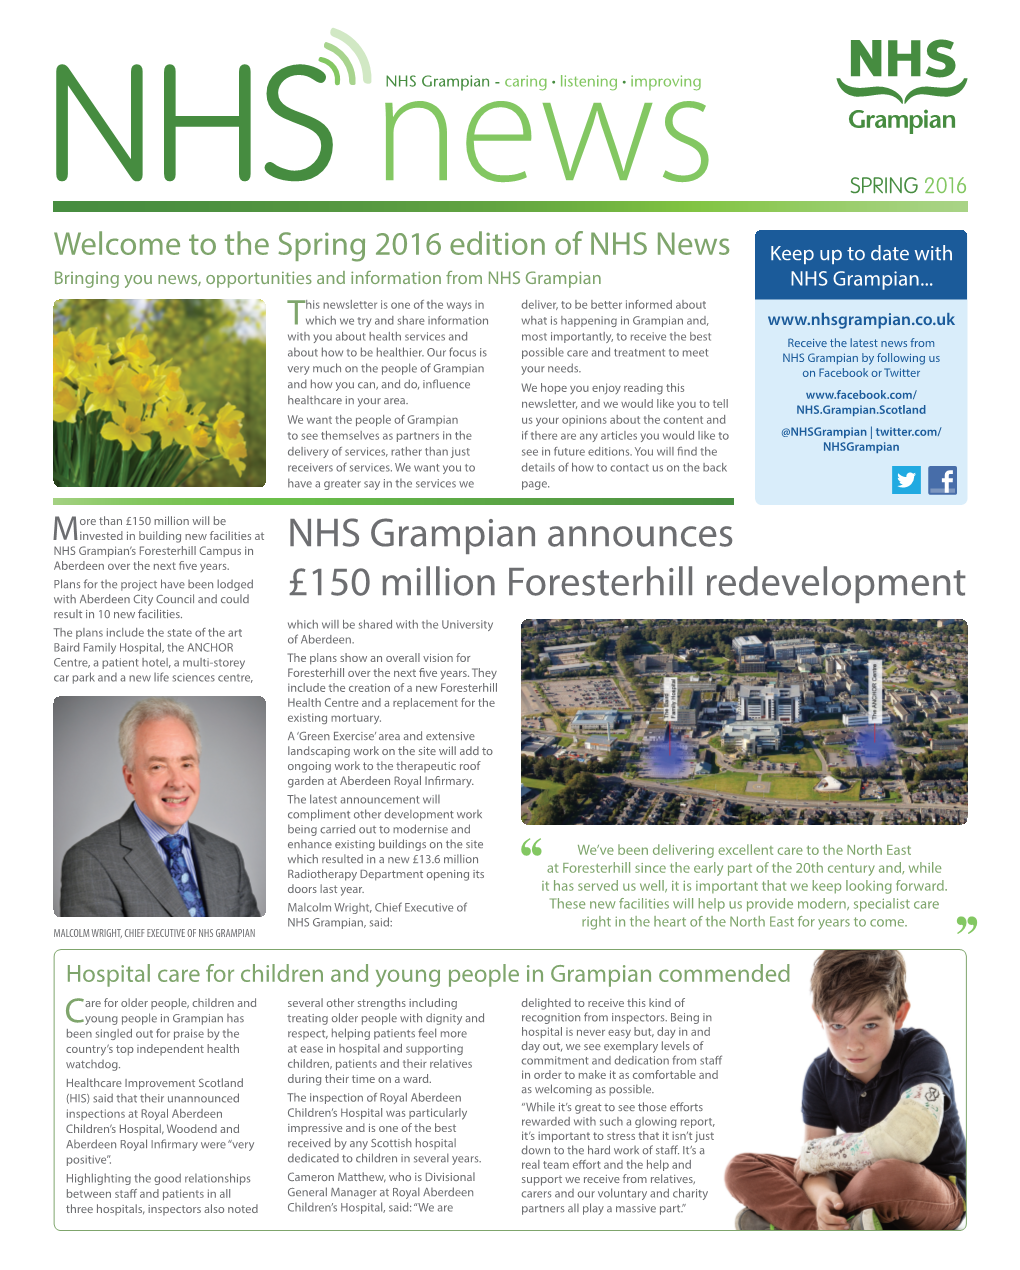 NHS Grampian Announces £150 Million Foresterhill Redevelopment